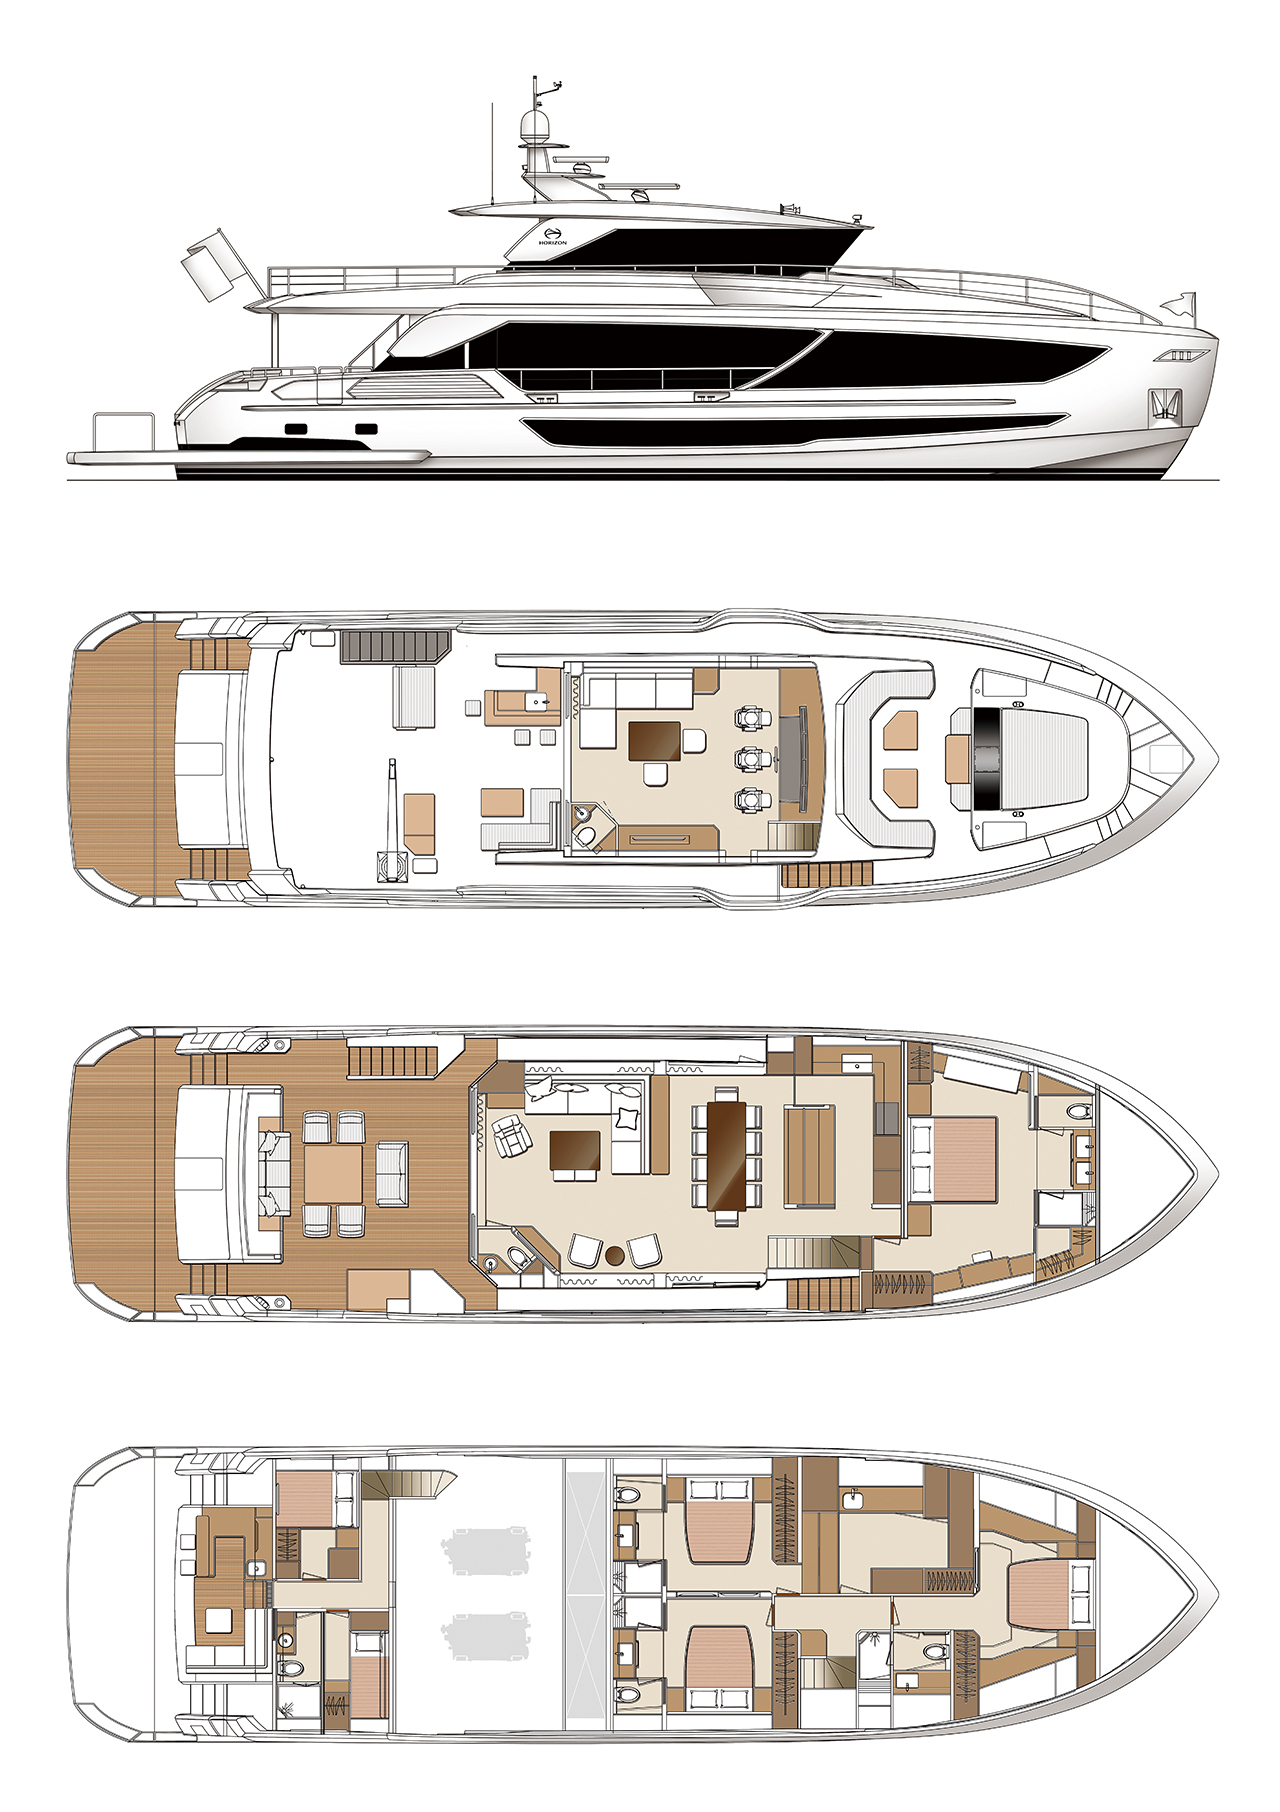 90 foot motor yacht